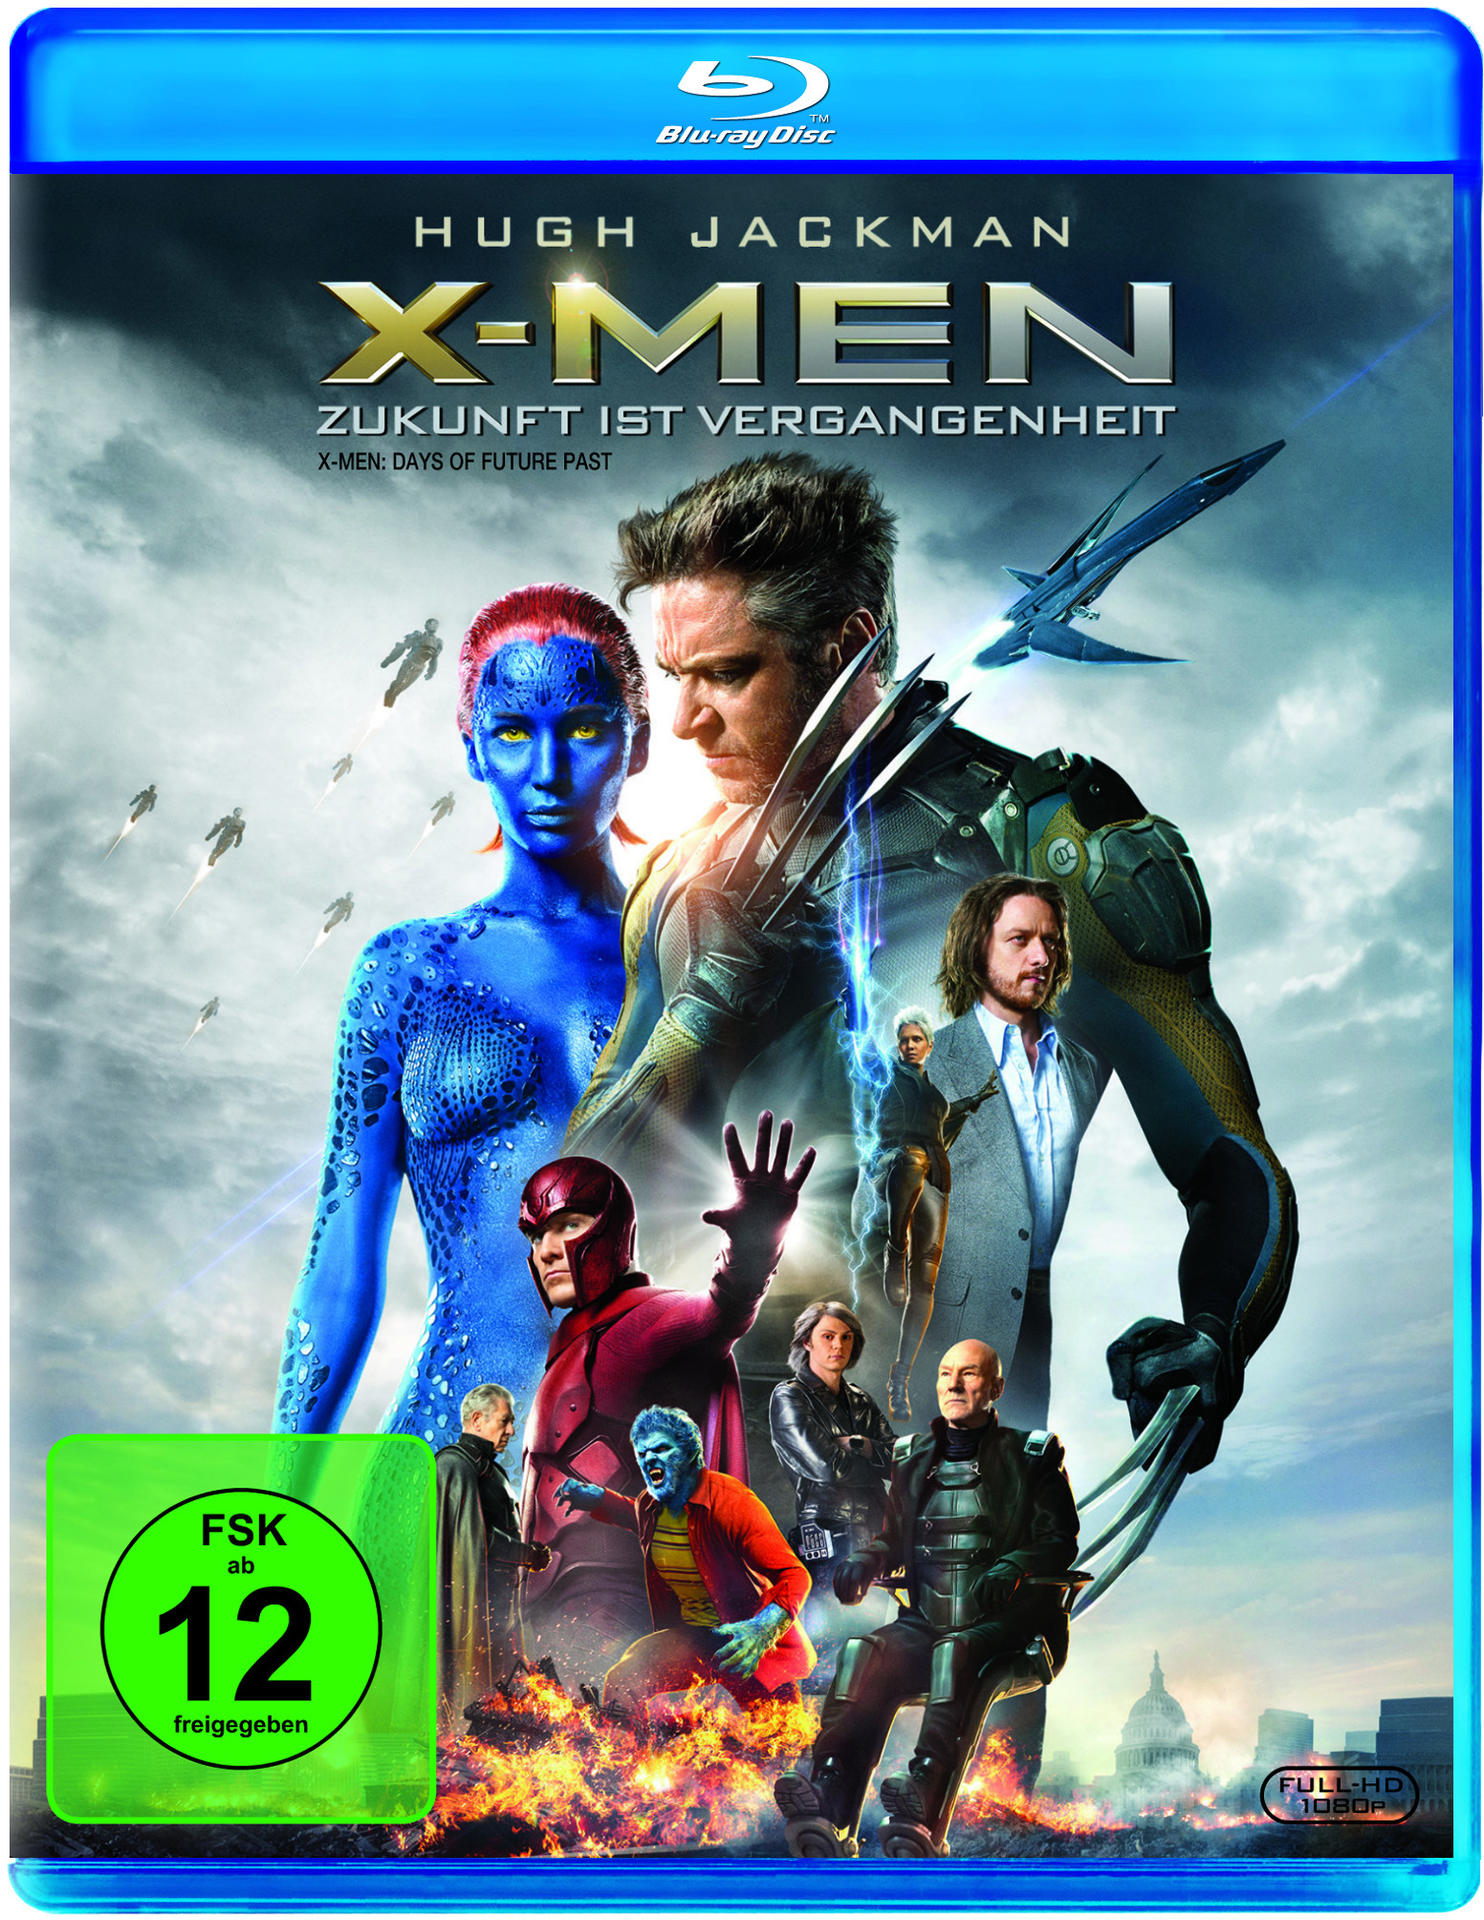 X-Men - Zukunft Vergangenheit Blu-ray ist